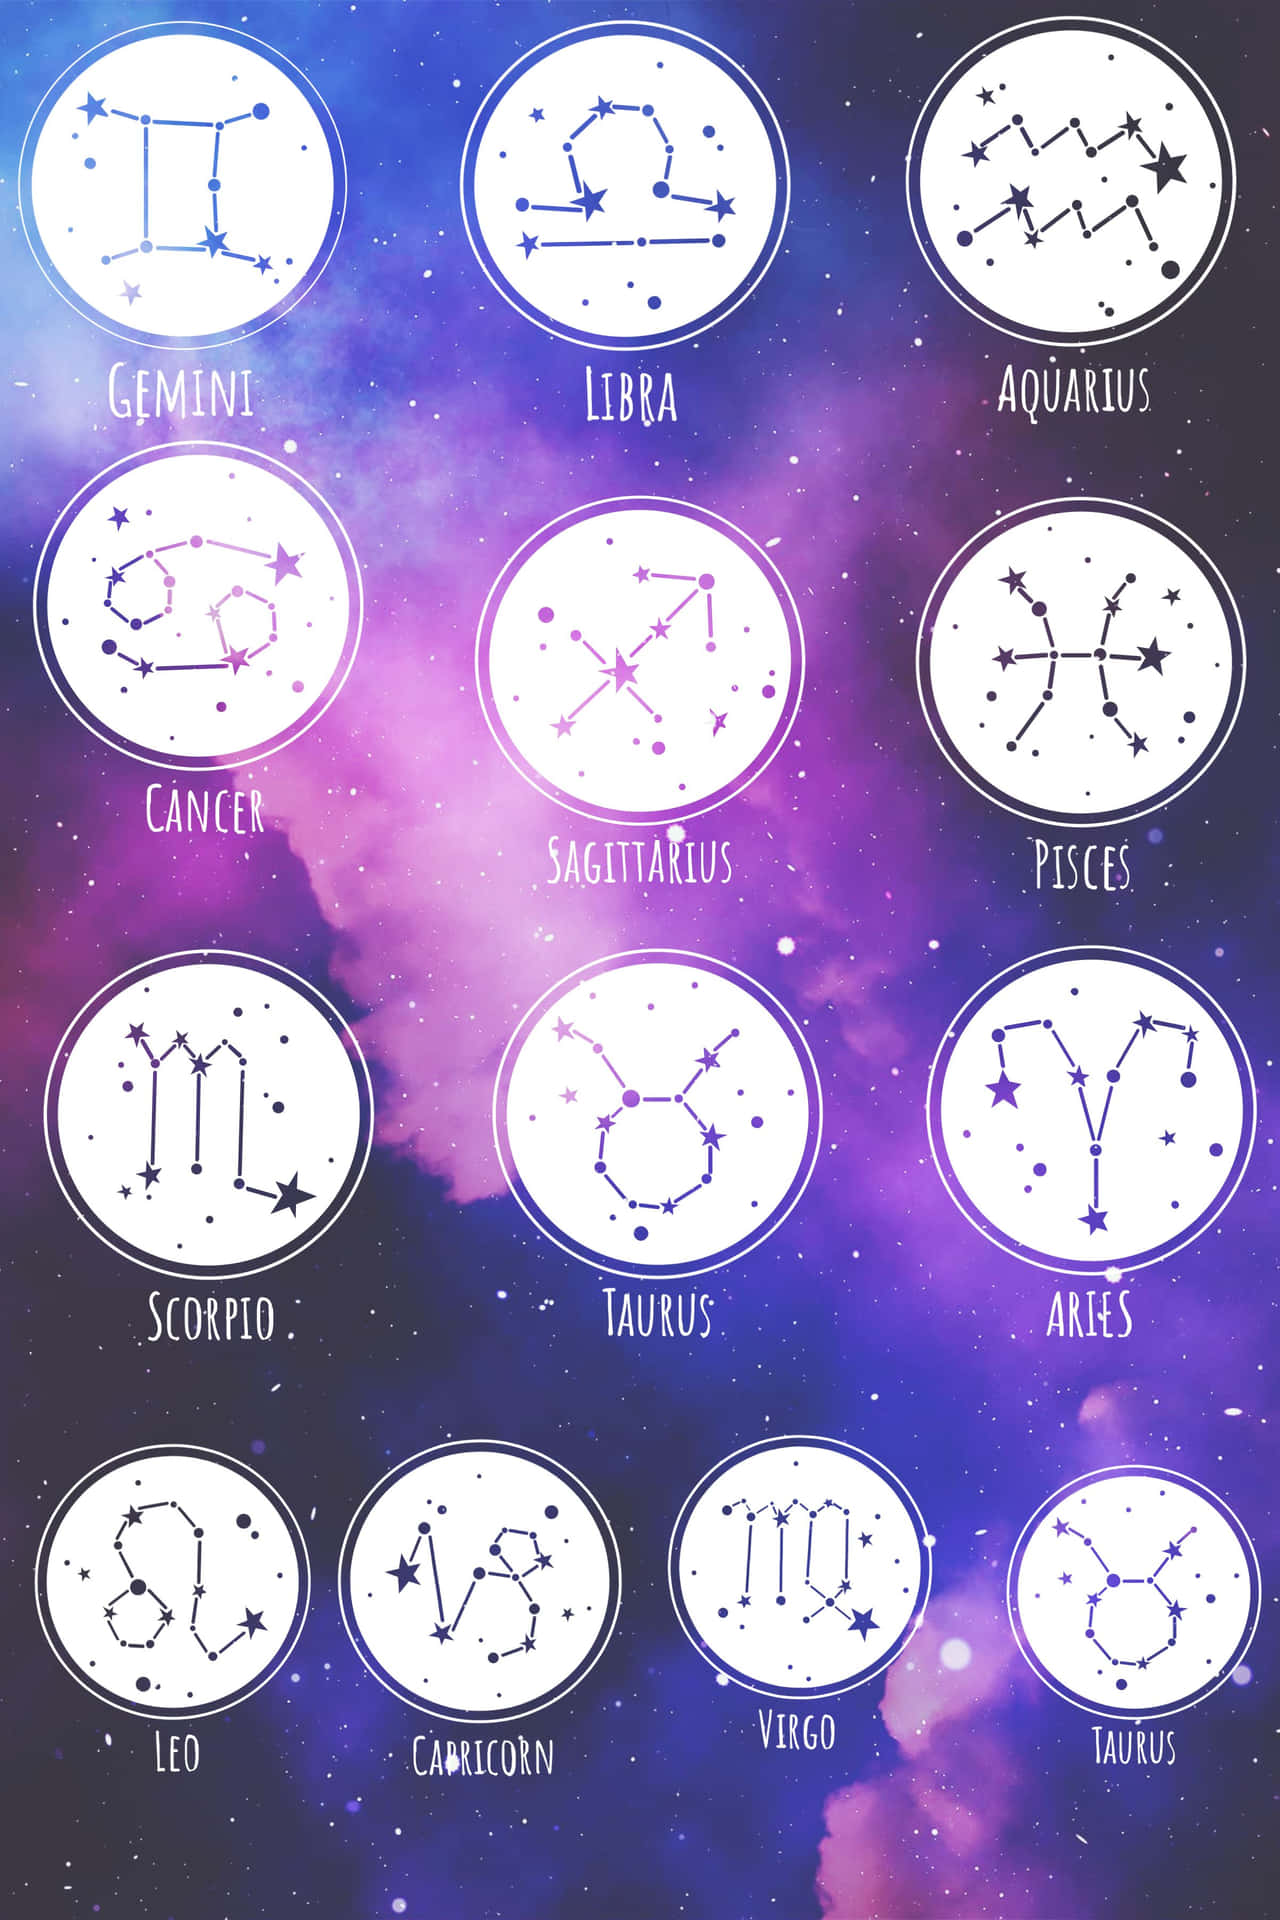 Captivating Leo Constellation Artwork